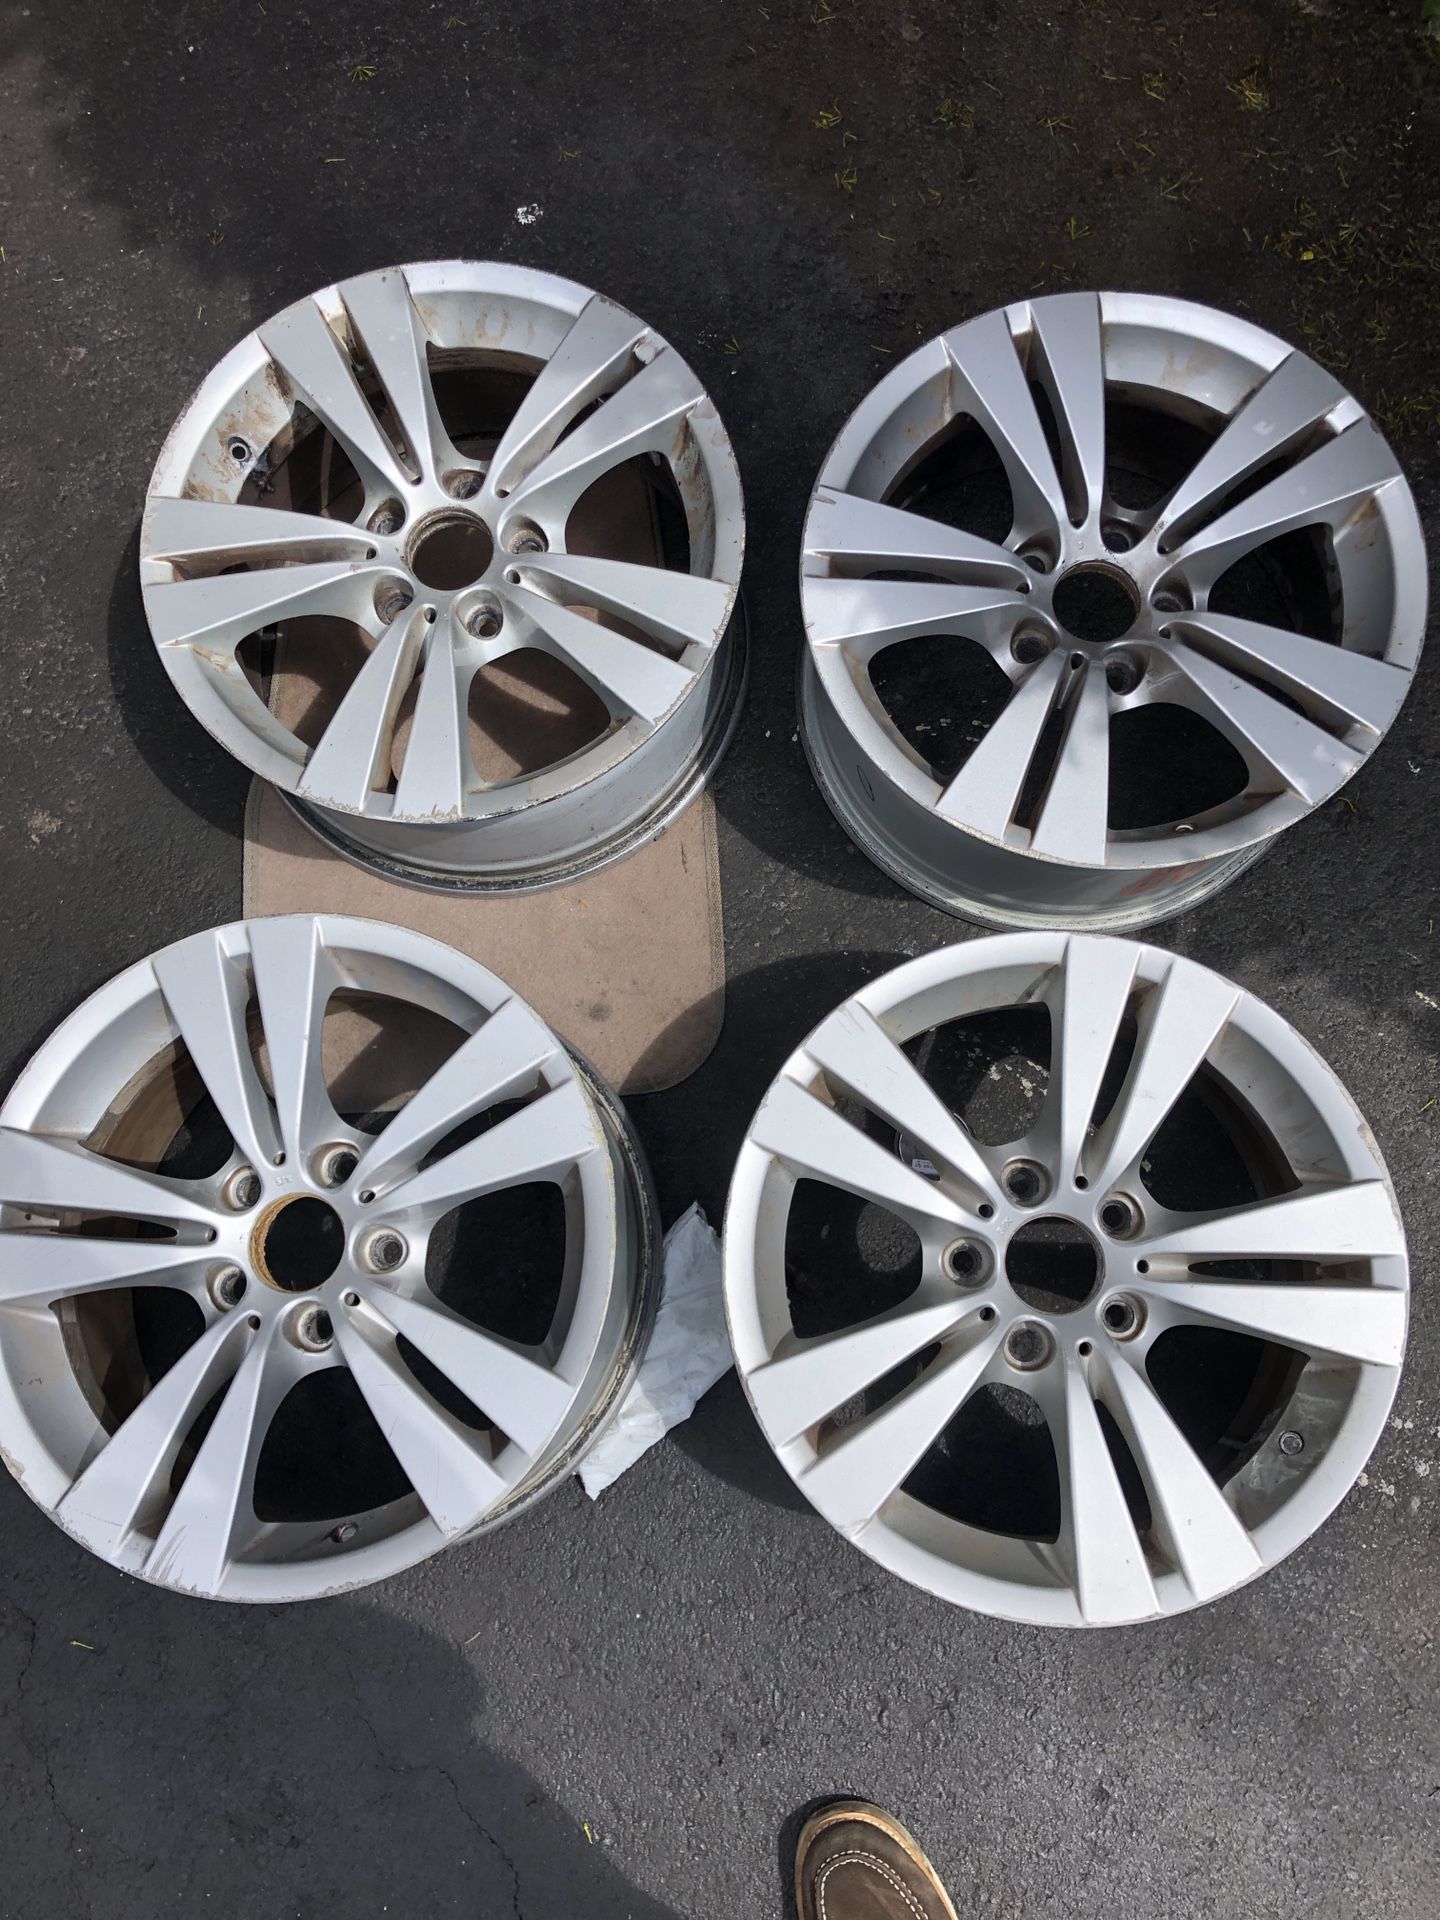 BMW factory 17” wheels alloy rims